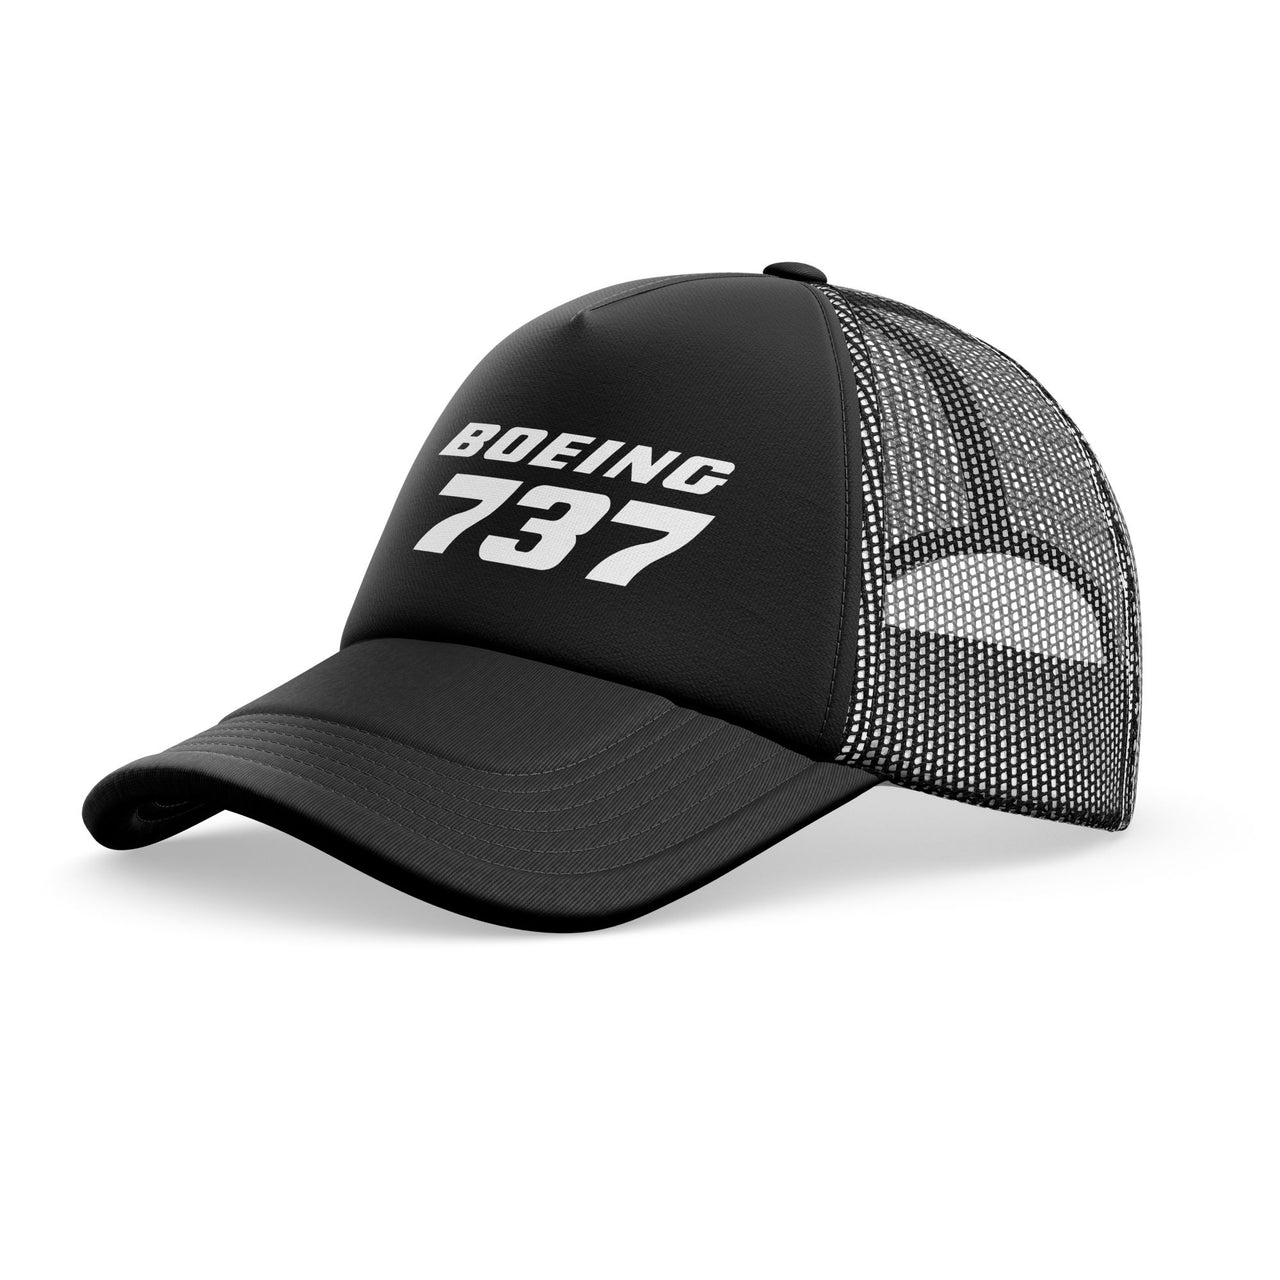 Boeing 737 & Text Designed Trucker Caps & Hats